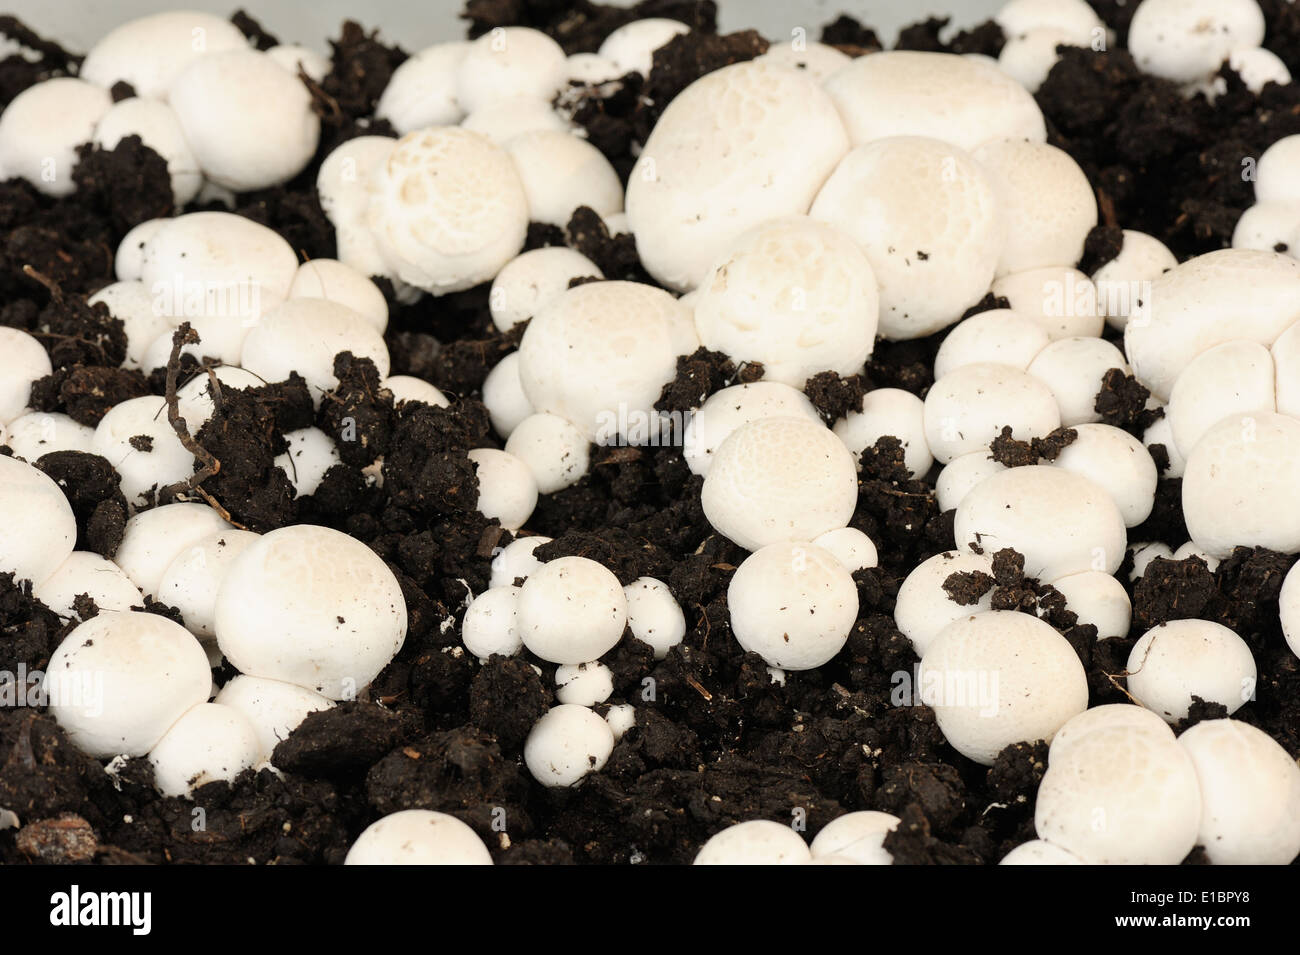 fruiting bodies of white champignon, edible gilled fungus. Stock Photo